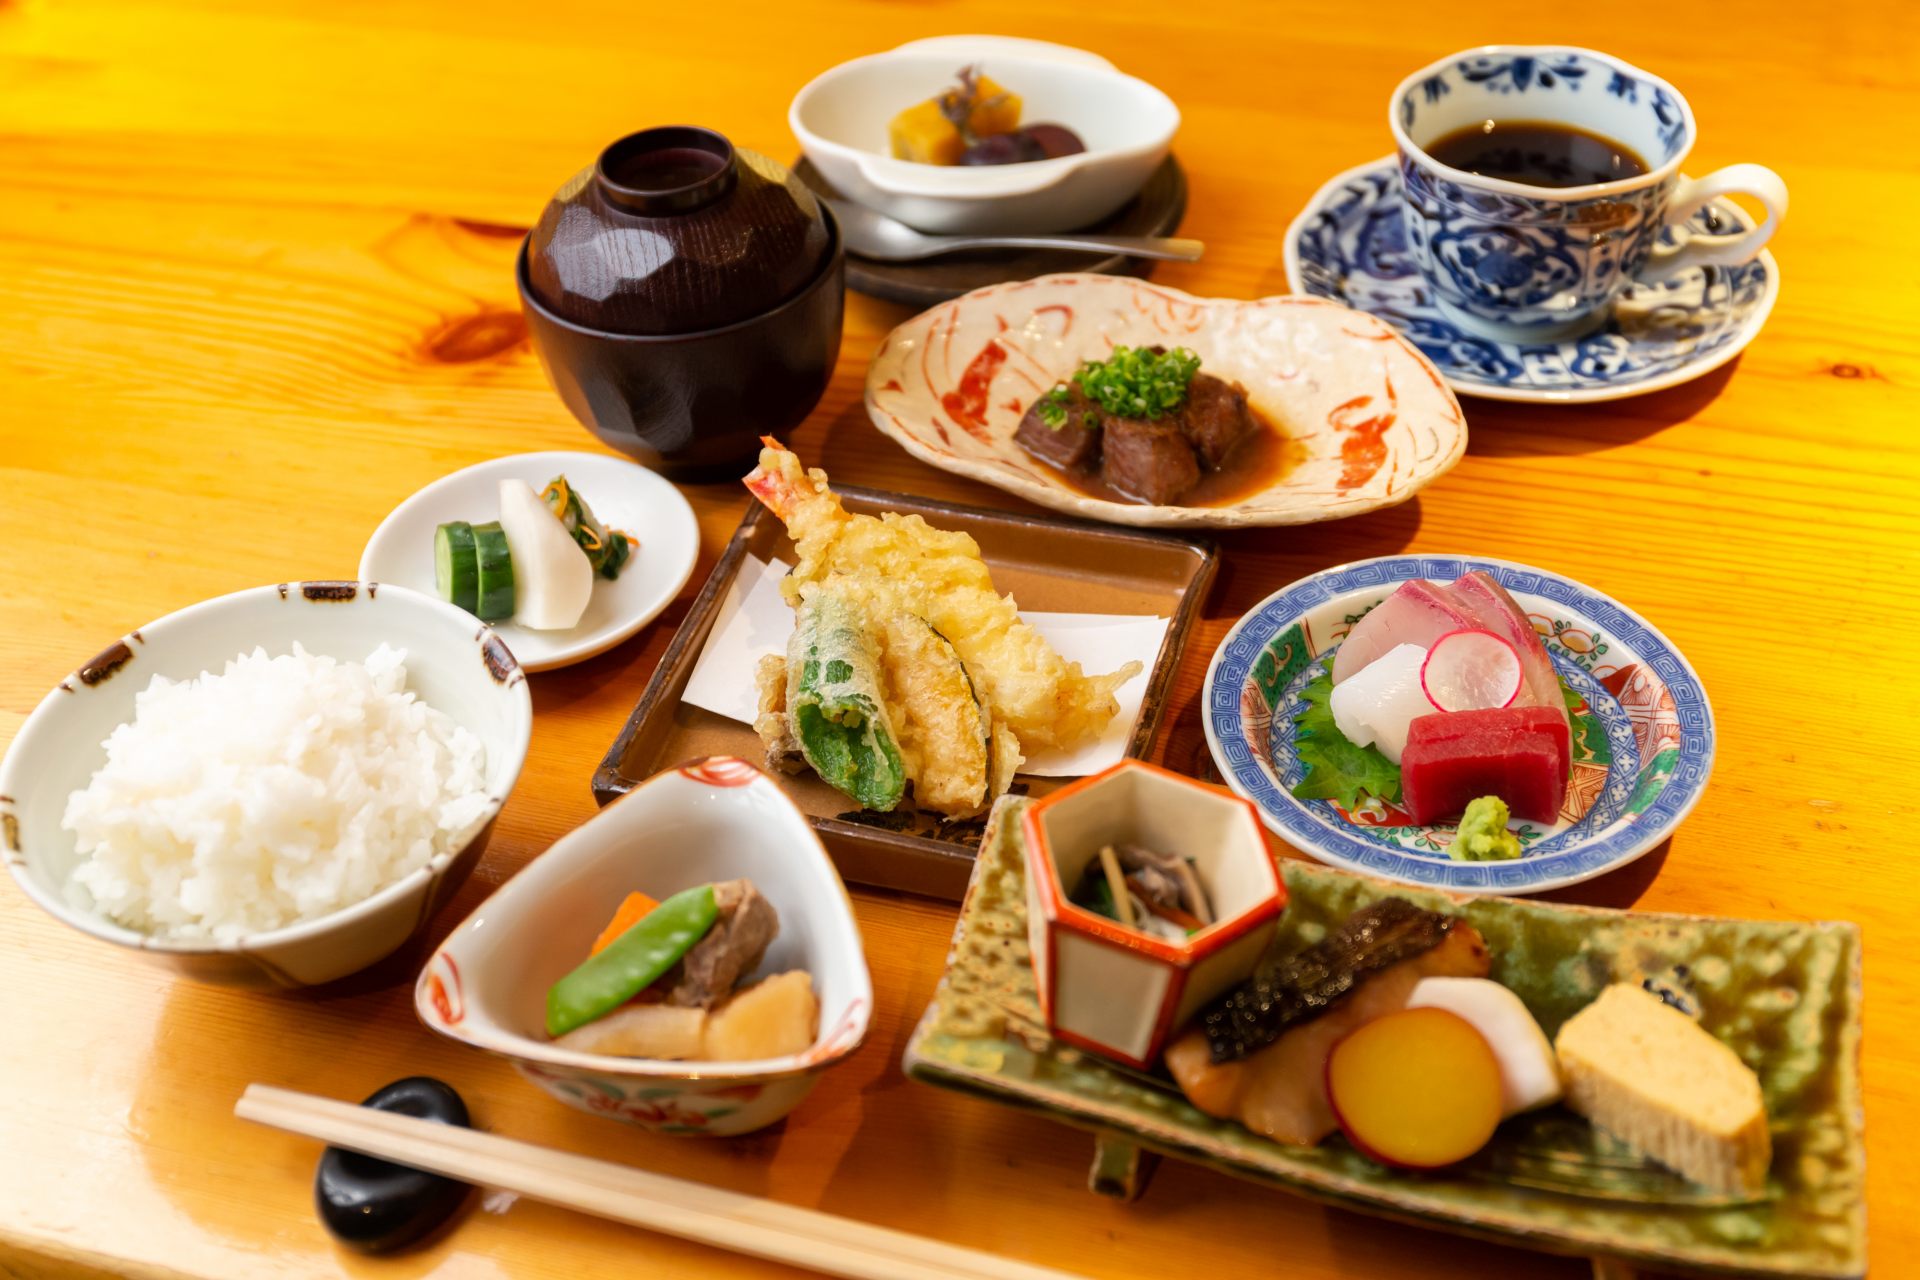 Lunch at Toki no Kura, featuring seasonally fresh fish and vegetables.